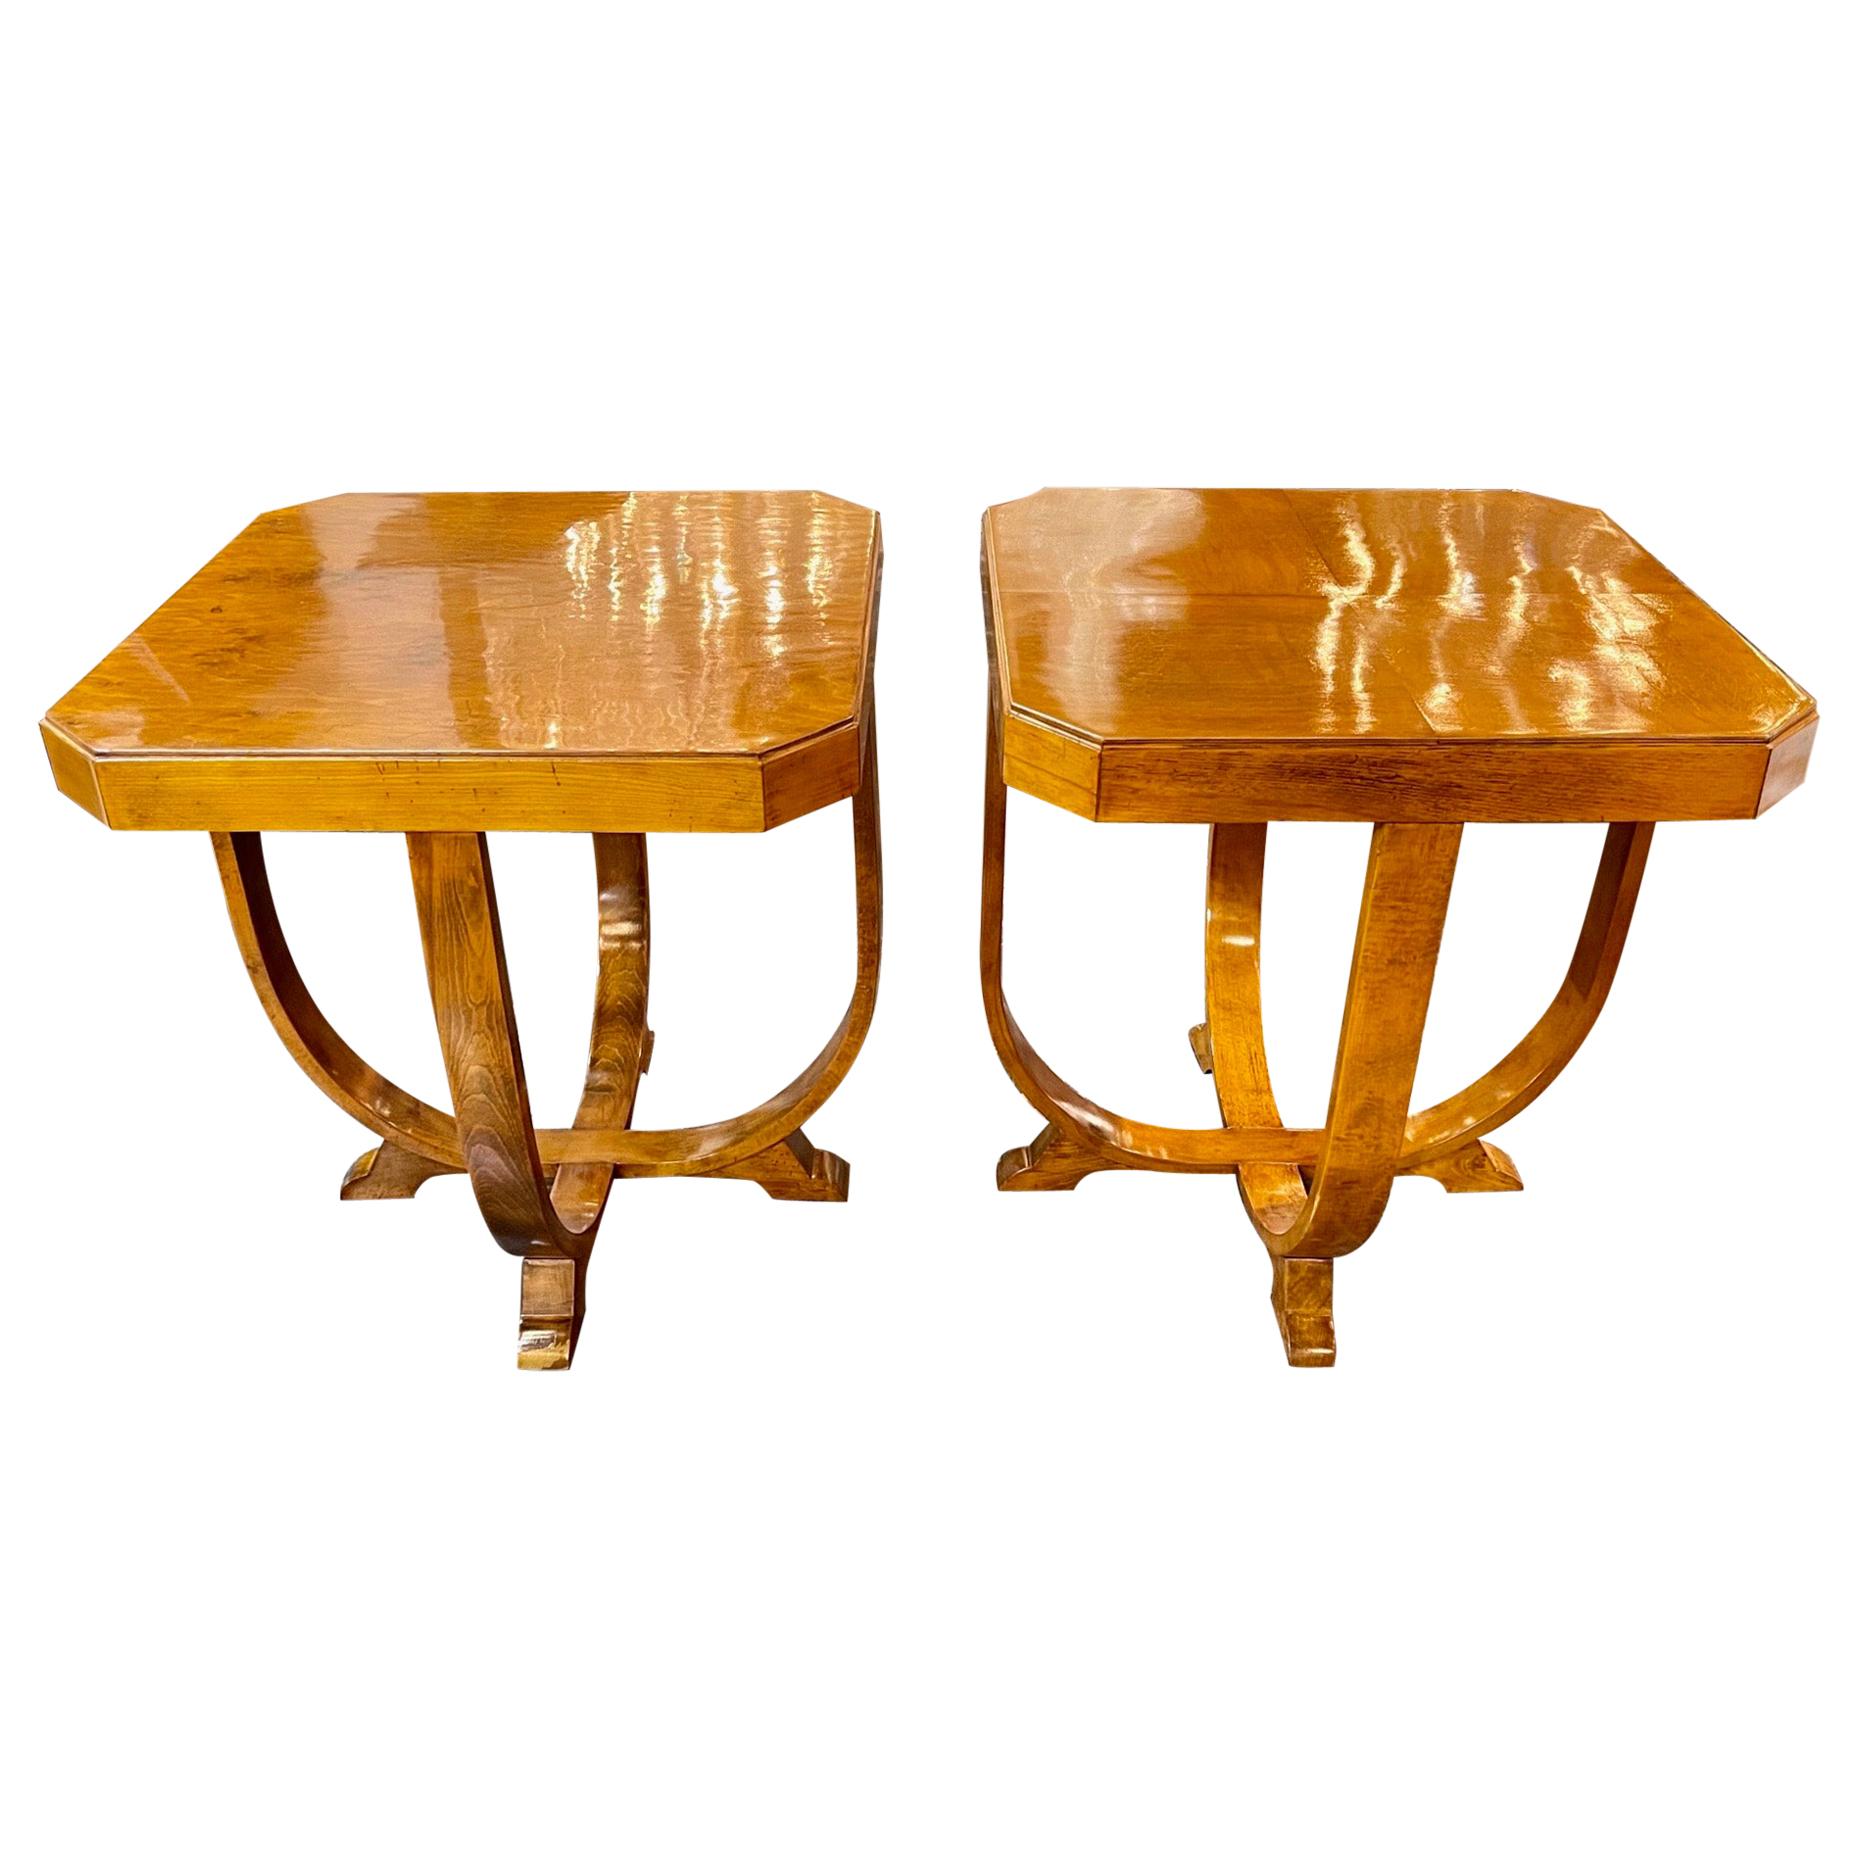 Midcentury French Art Deco Alderwood Side Tables